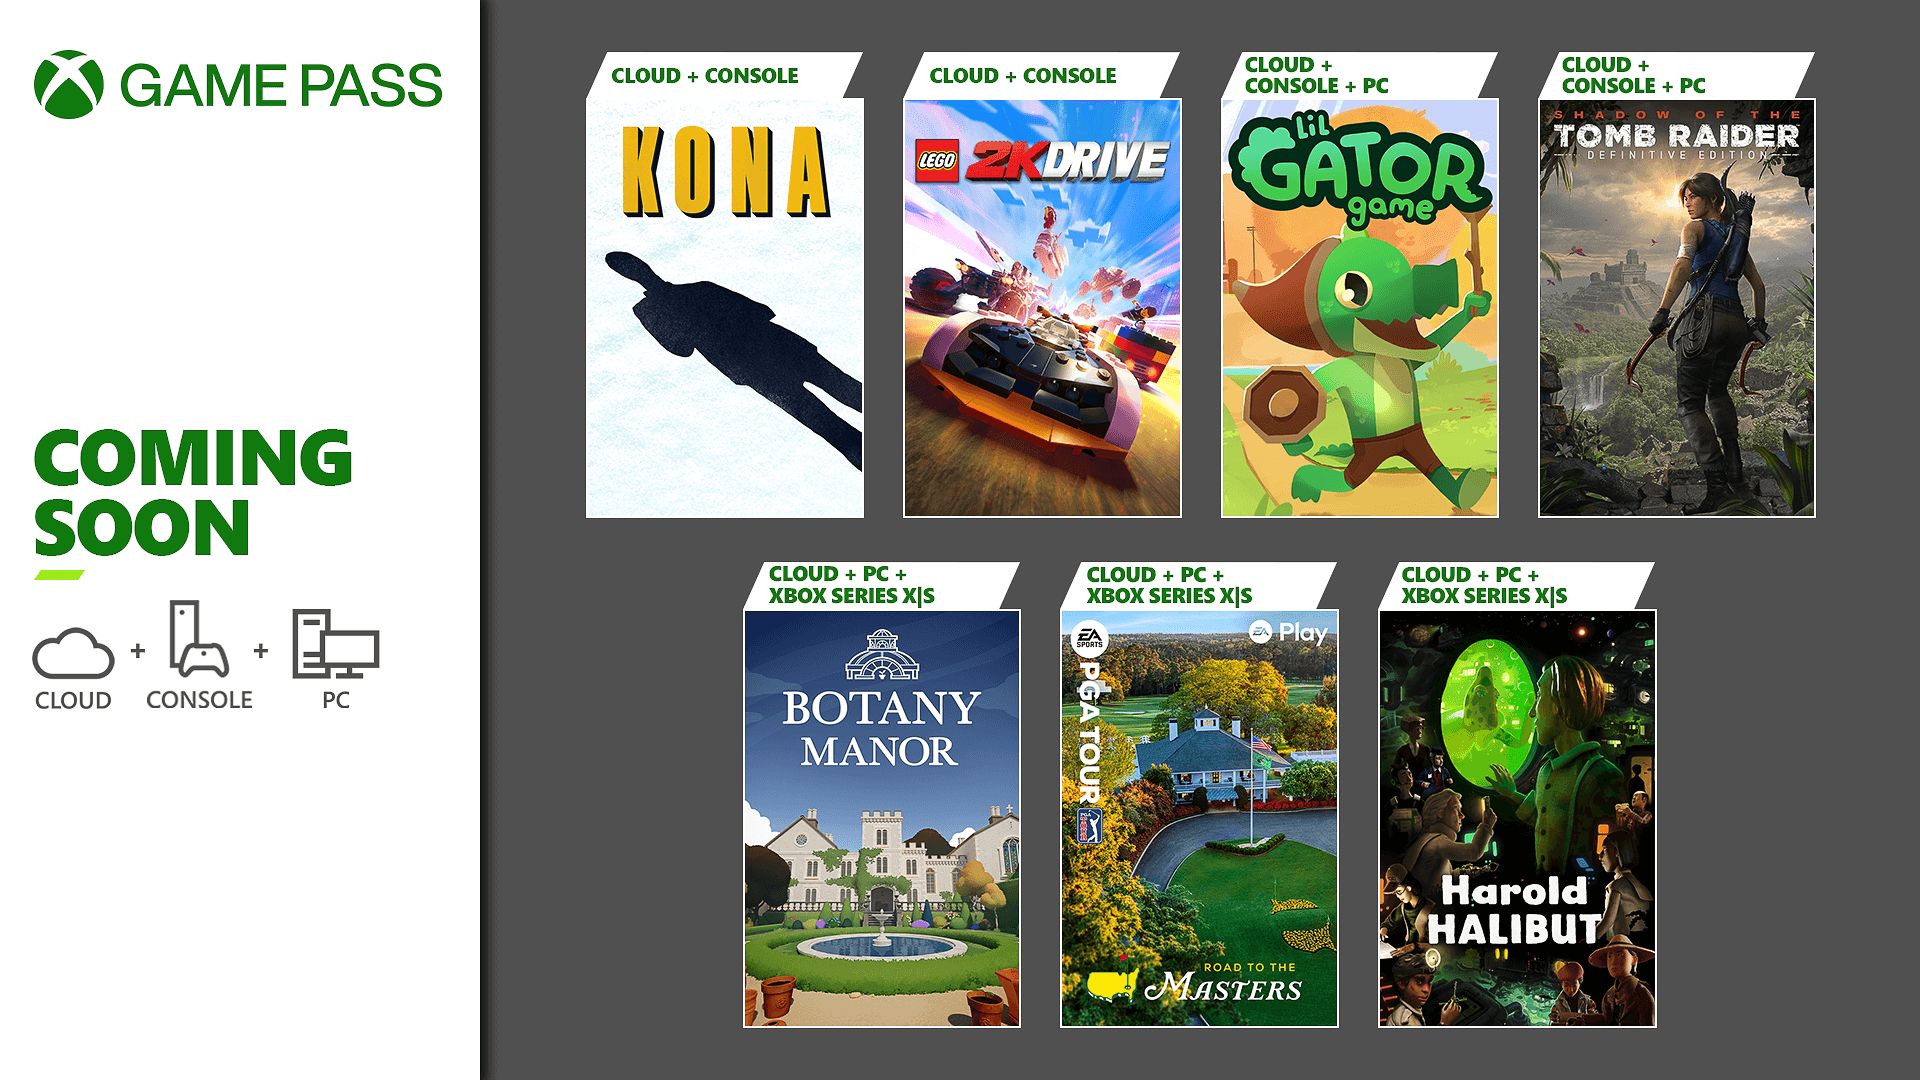 Game Pass - April 2-16 - Wave 1 - Lego 2K Drive, Lil Gator Game, PGA Tour, Botany Manor, Kona, Superhot: MCD + 2 more